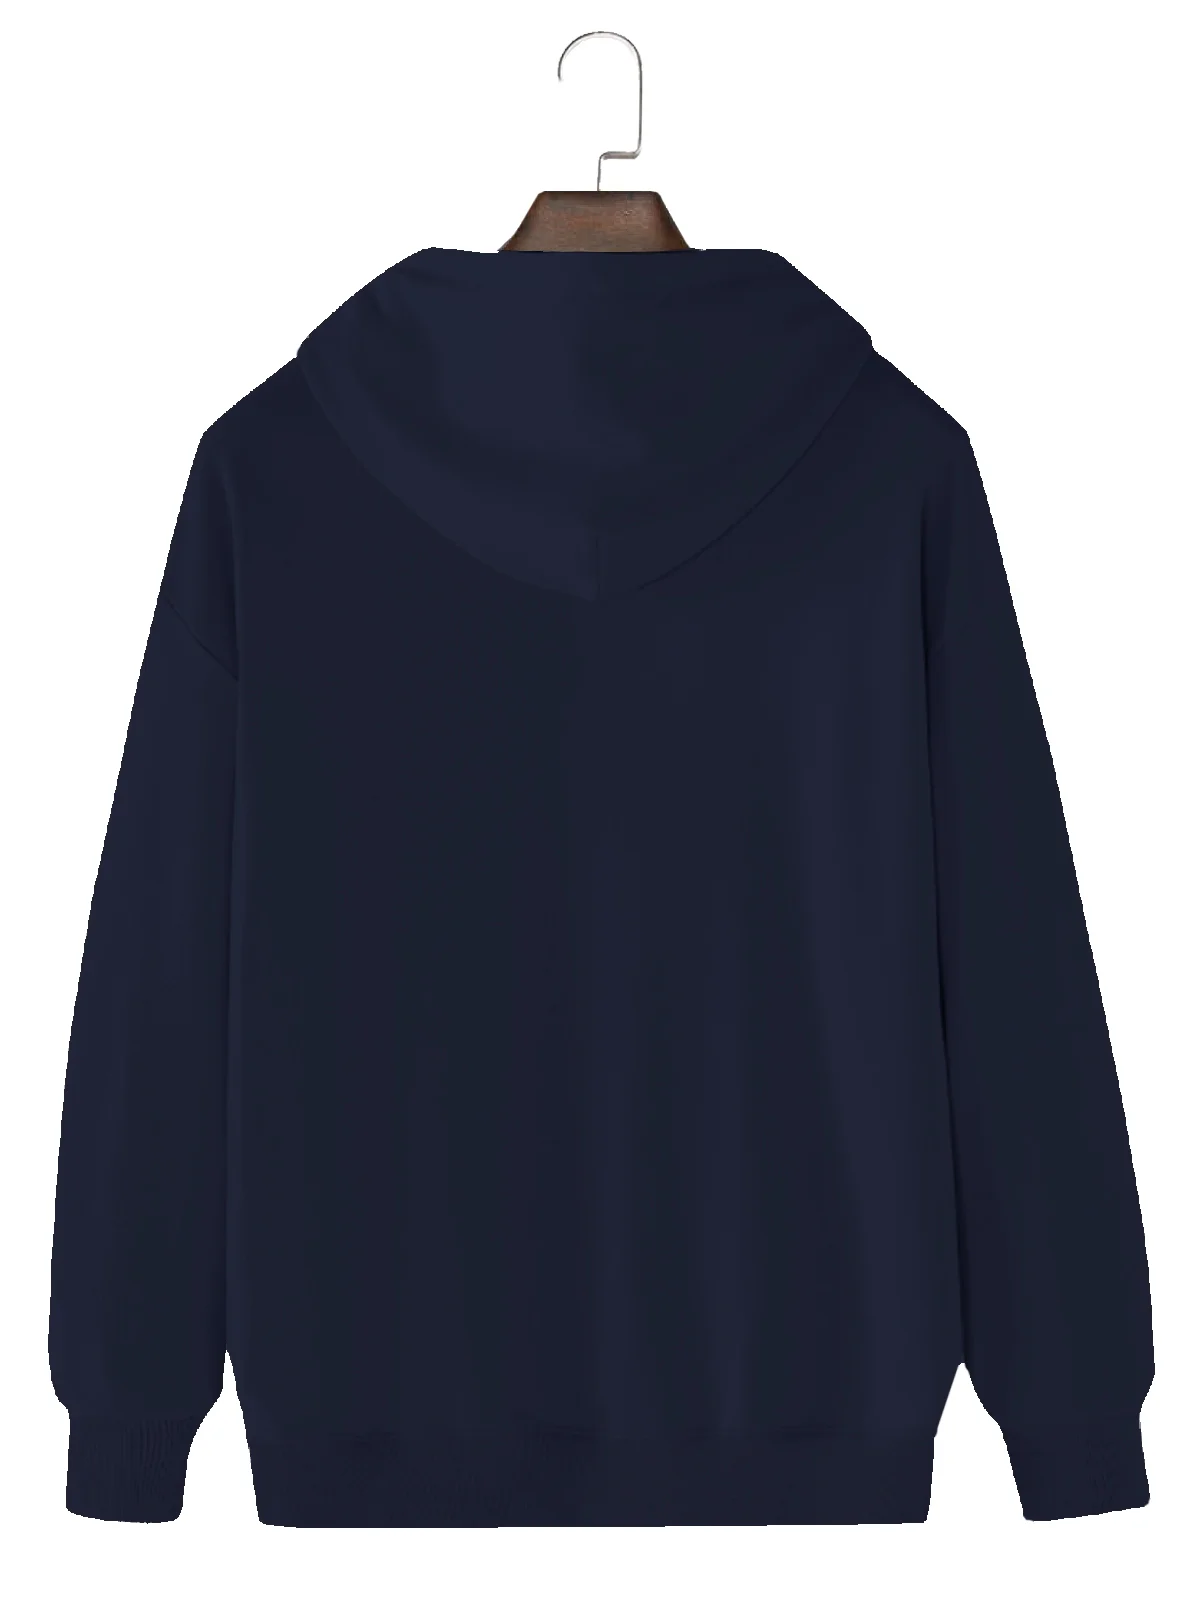 Royaura Men's Casual Hoodies Of Course I Talk To Myself Oversized Comfortable Blend Sweatshirts